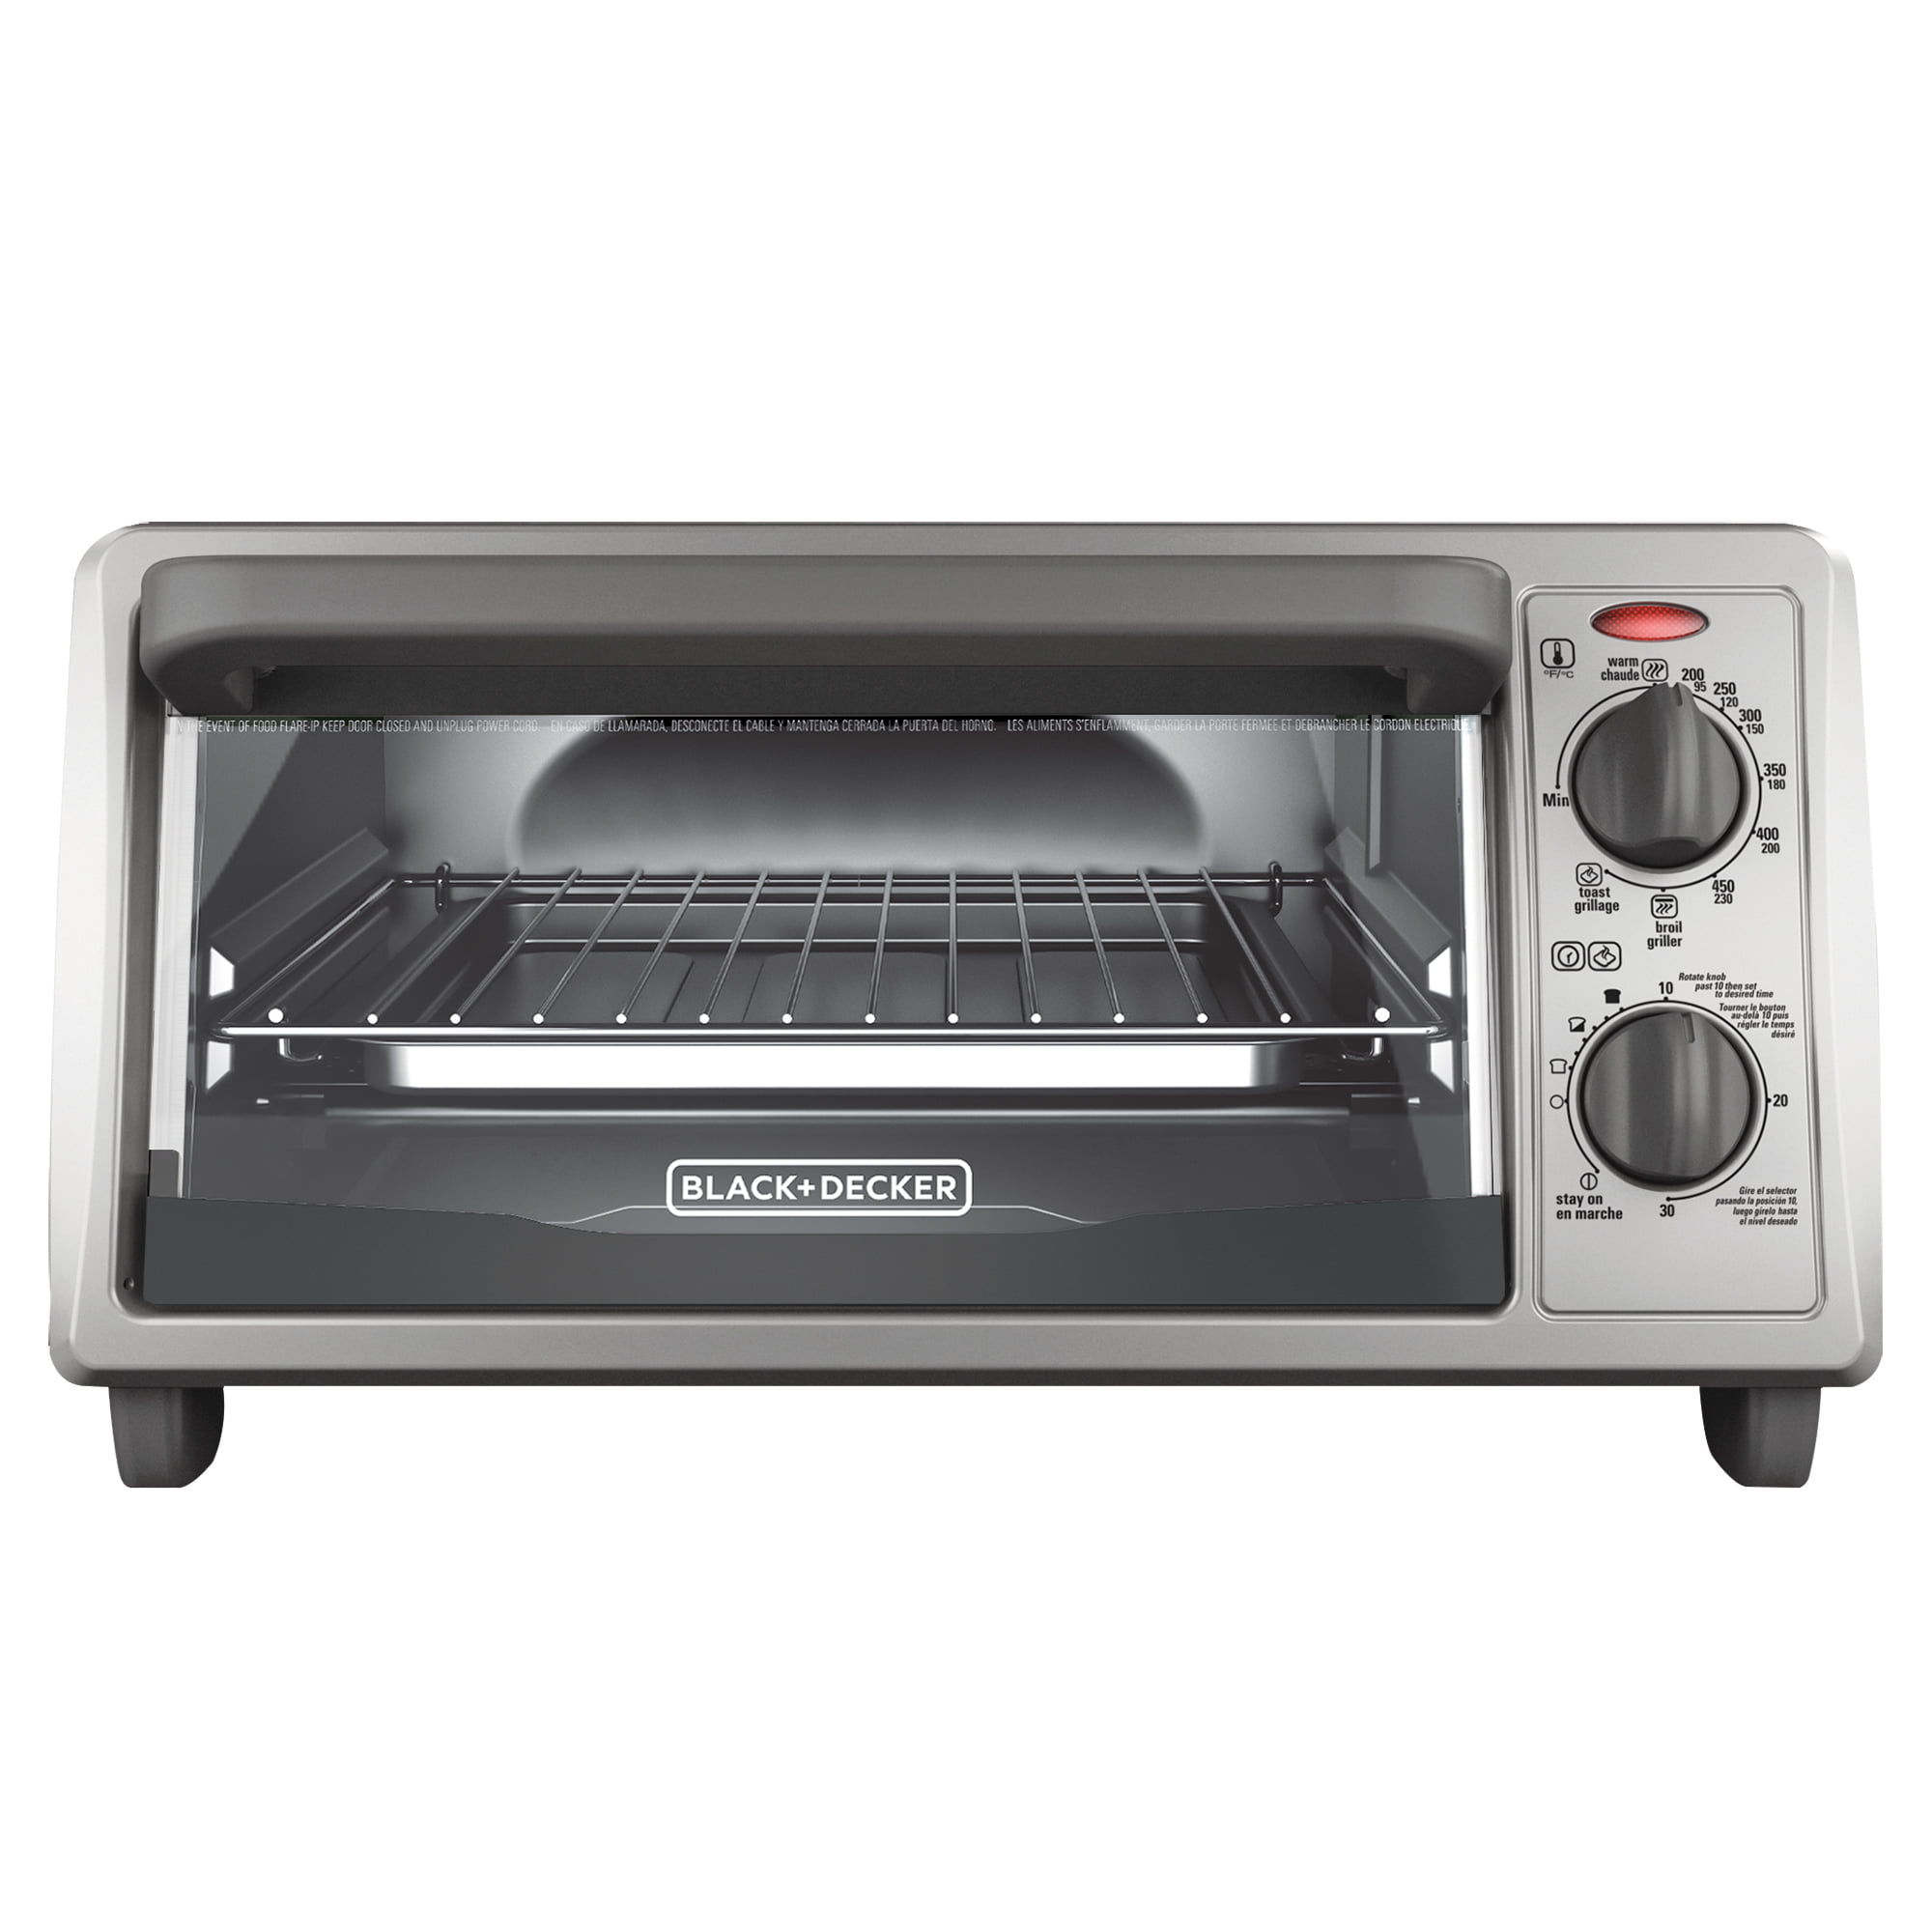  Black & Decker™ 4-Slice Toaster Oven fits 9 Pizza